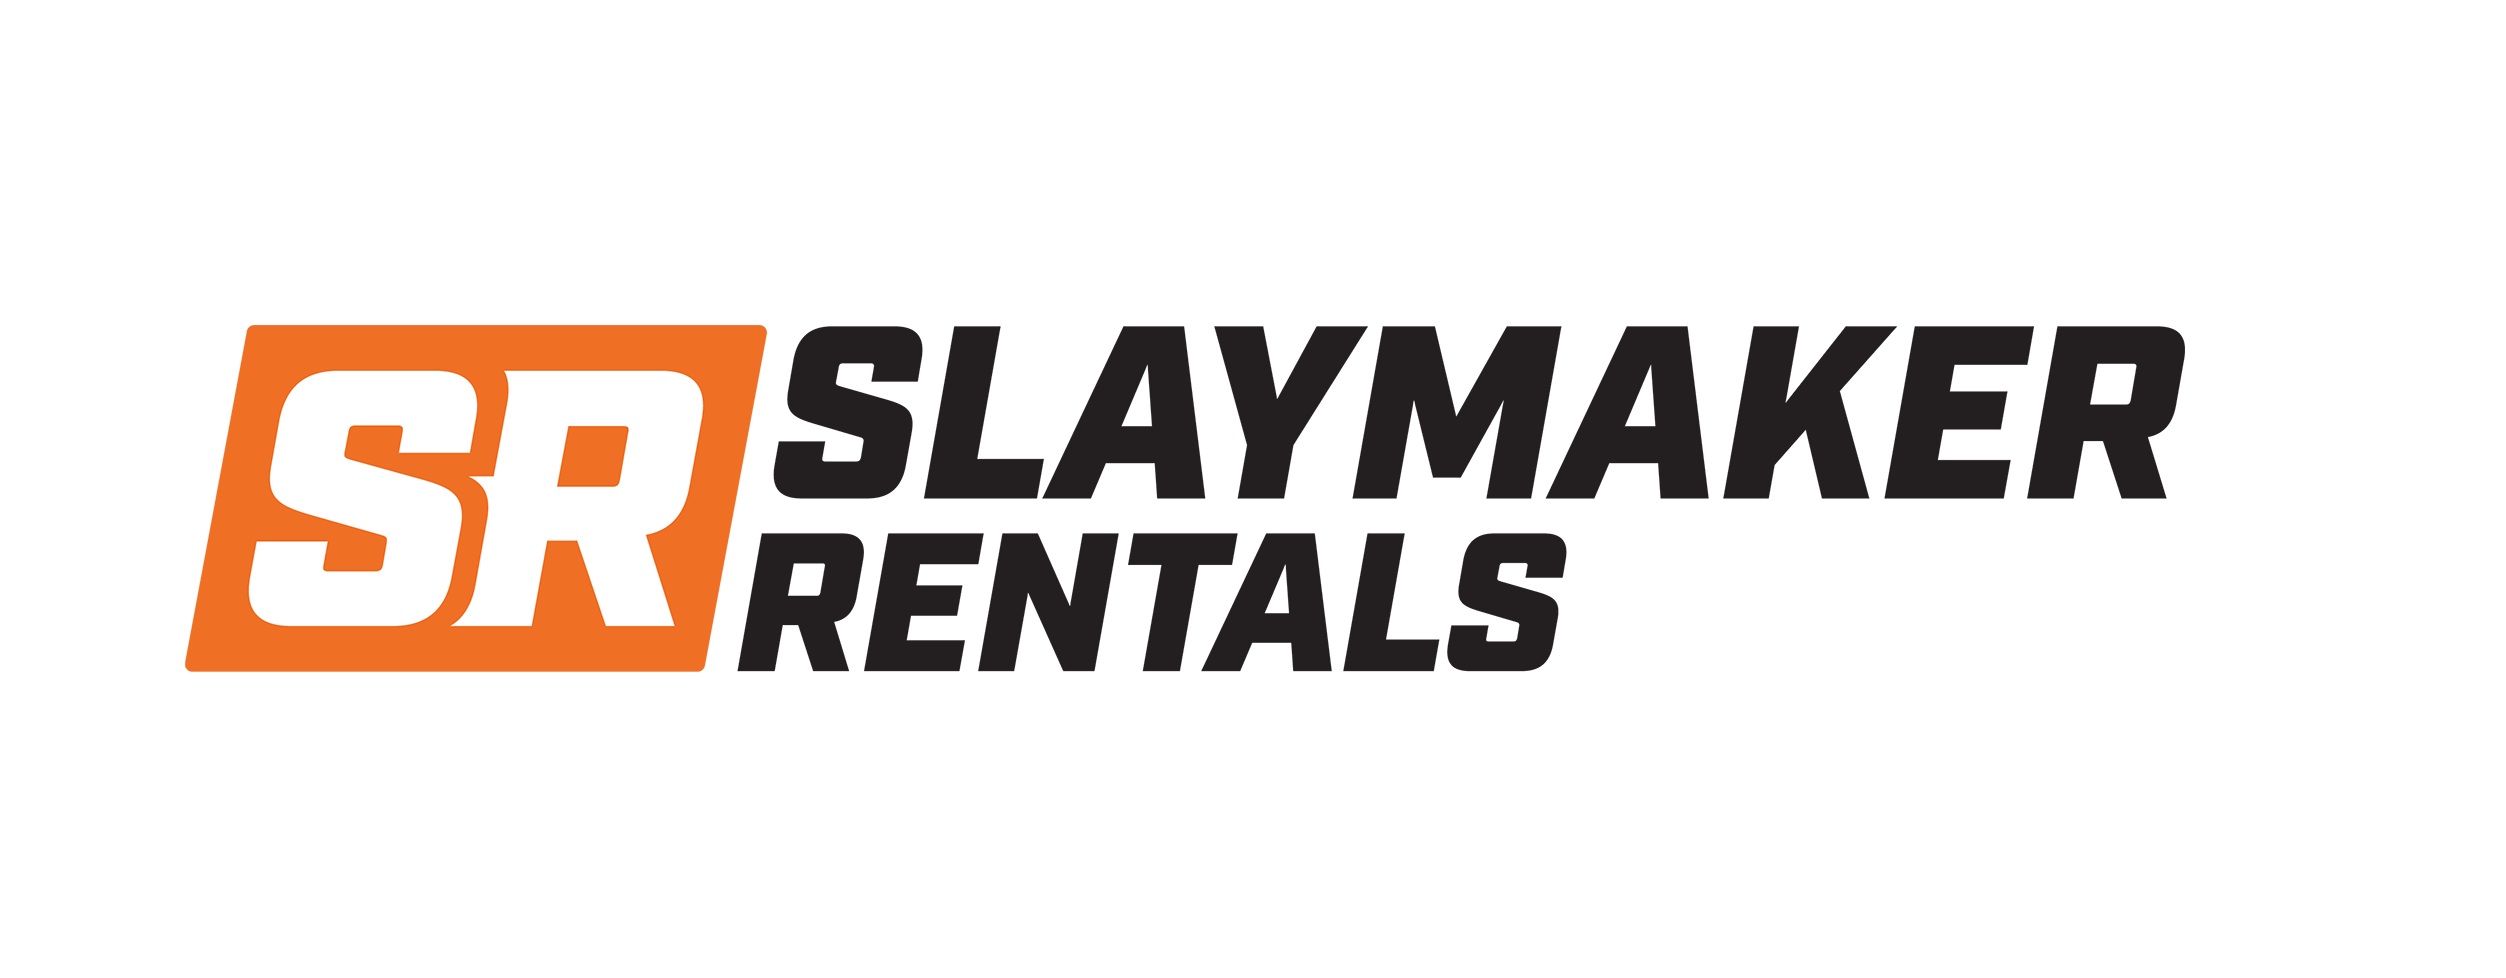 slaymaker-rentals-sr-logo_2506x978_with white boarder